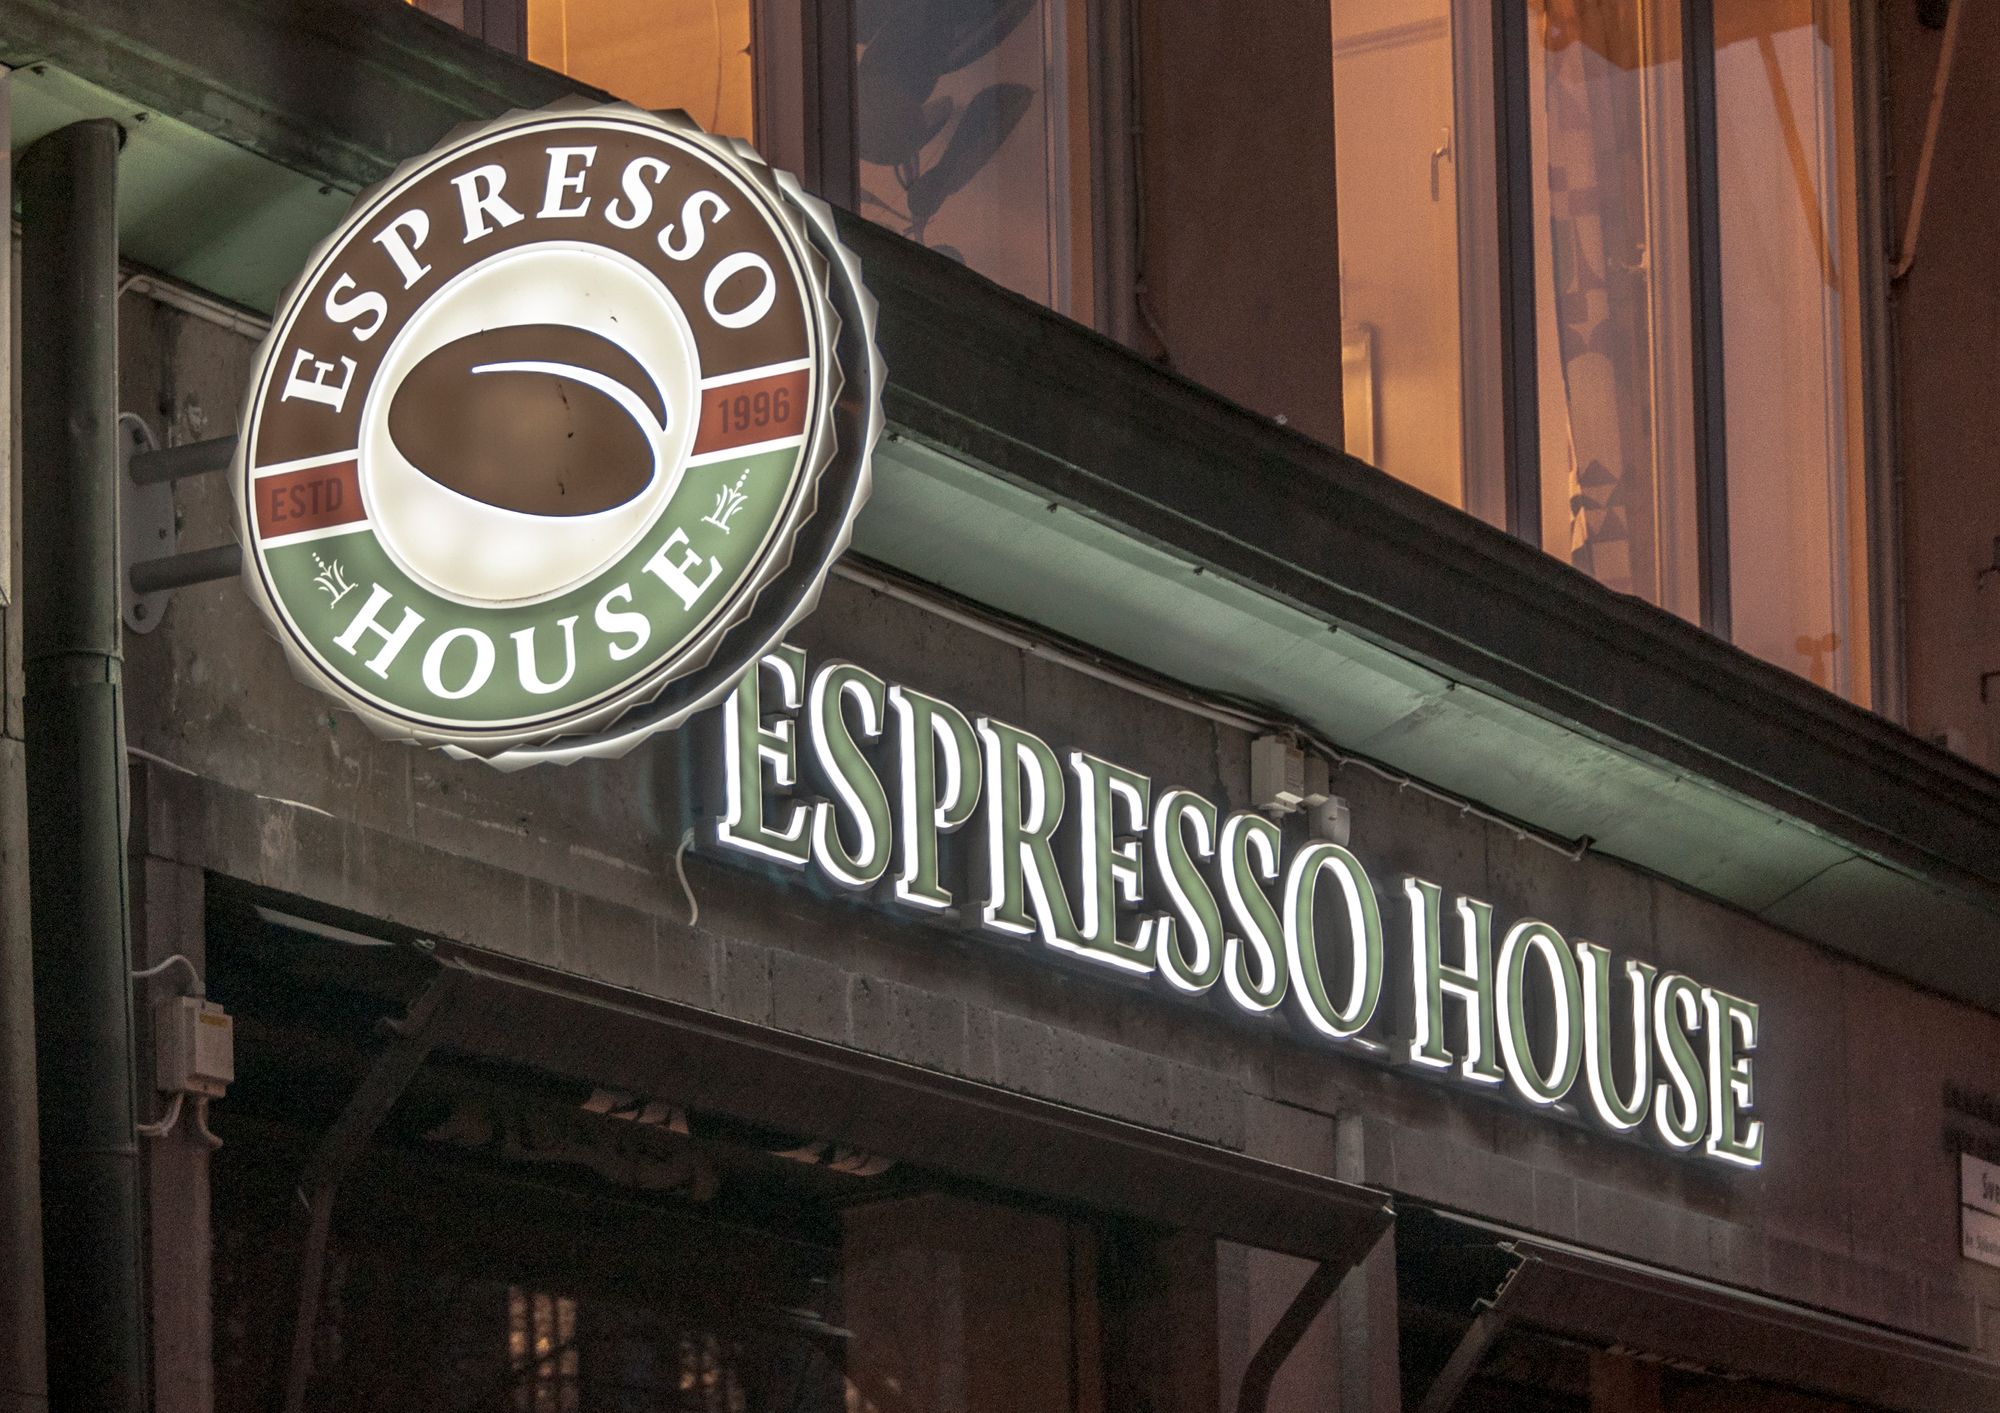 Espresso House is a Swedish coffee chain